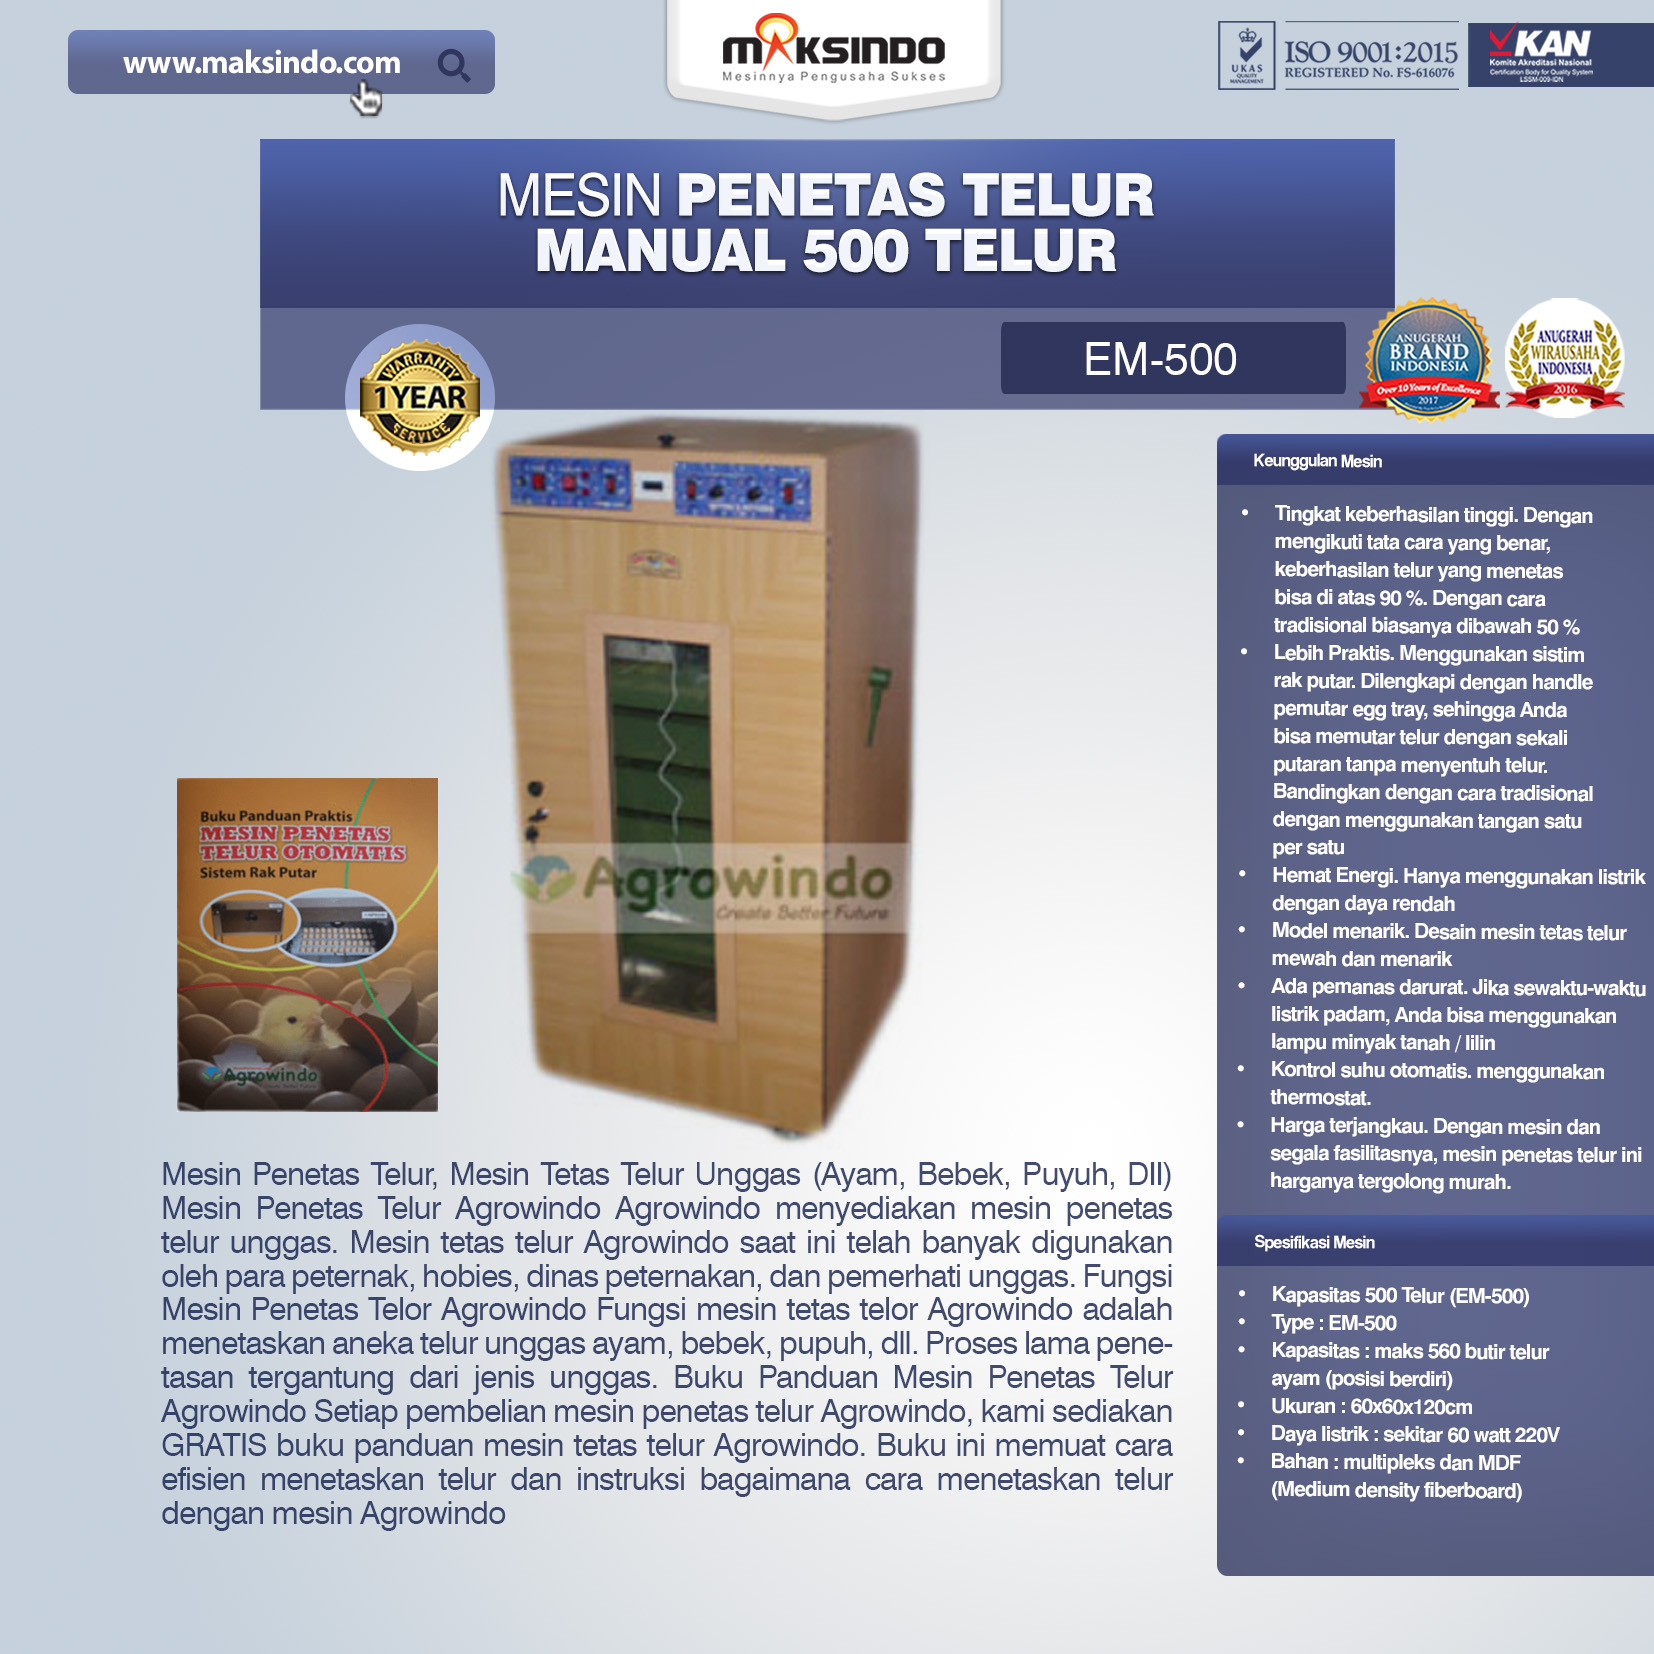 Mesin Penetas Telur Manual 500 Telur (EM-500)